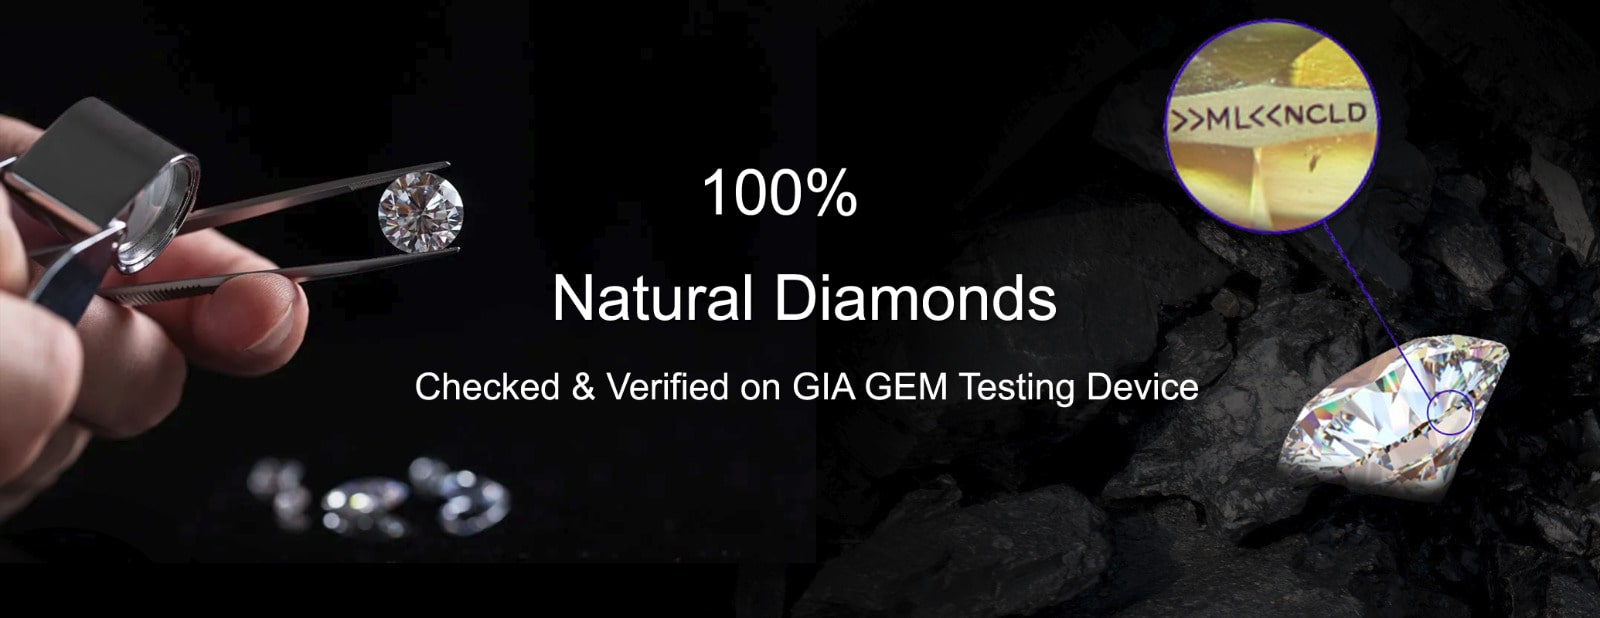 Natural-Diamond-banner